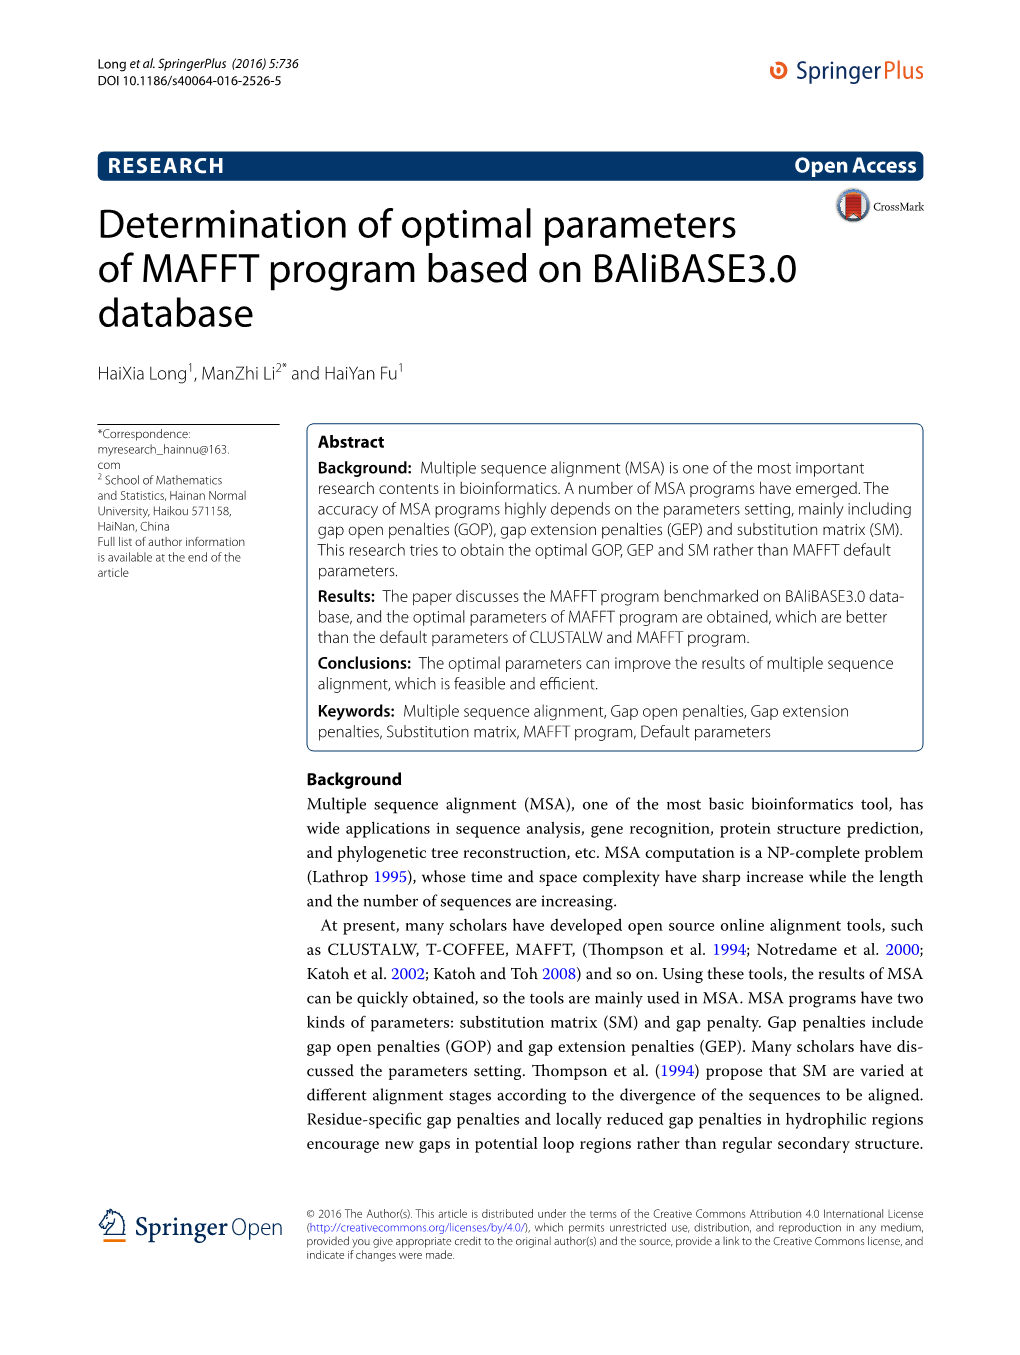 Determination of Optimal Parameters of MAFFT Program Based on Balibase3.0 Database